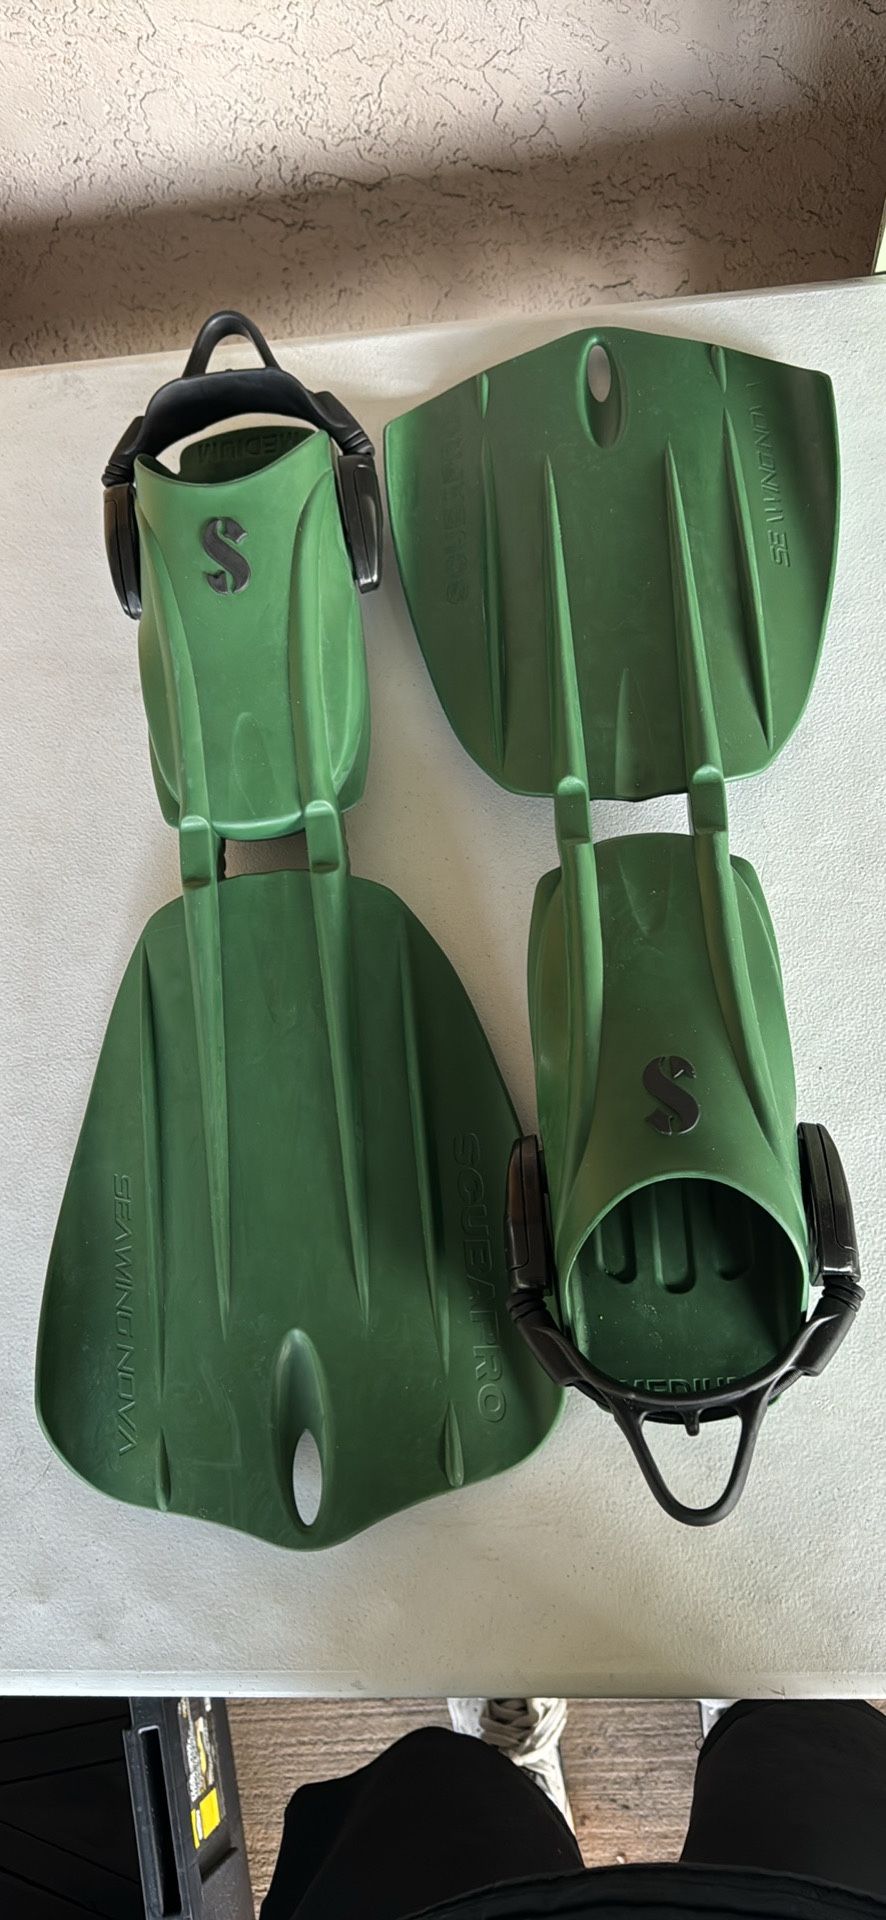 ScubaPro Seawing Nova Gorilla Fin - Army Green - Sz M